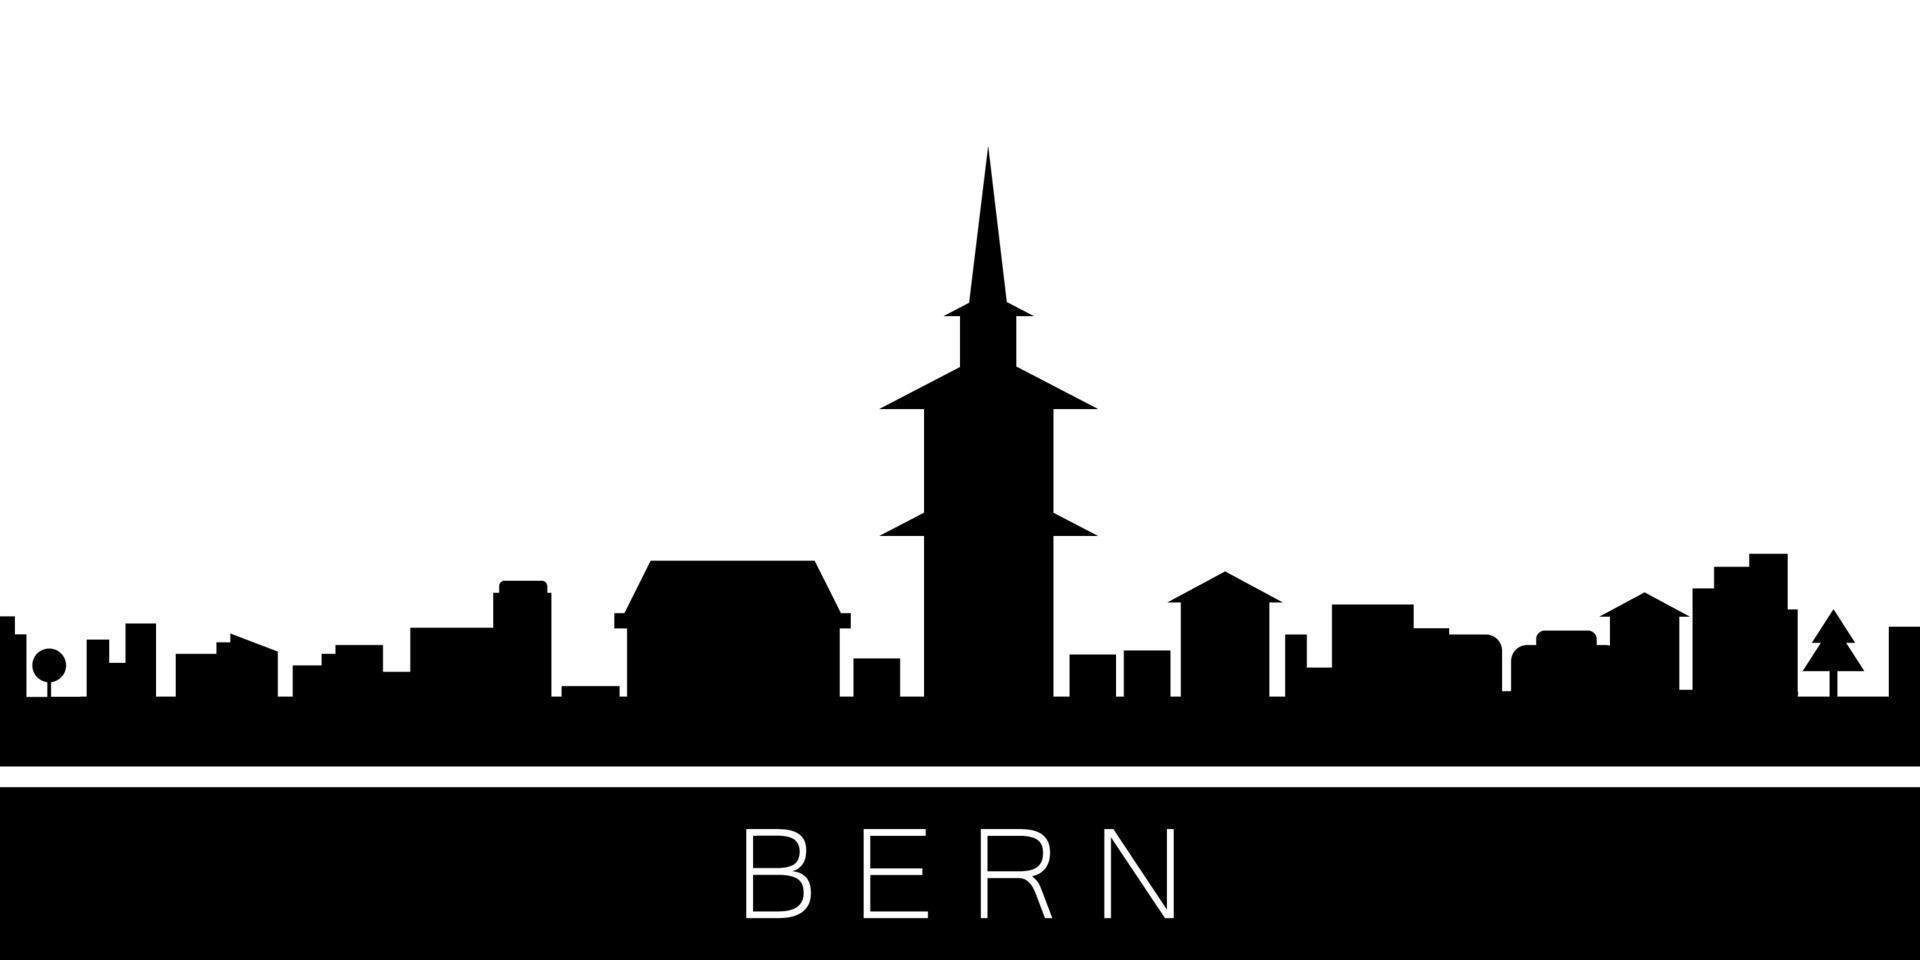 Bern detailed skyline vector